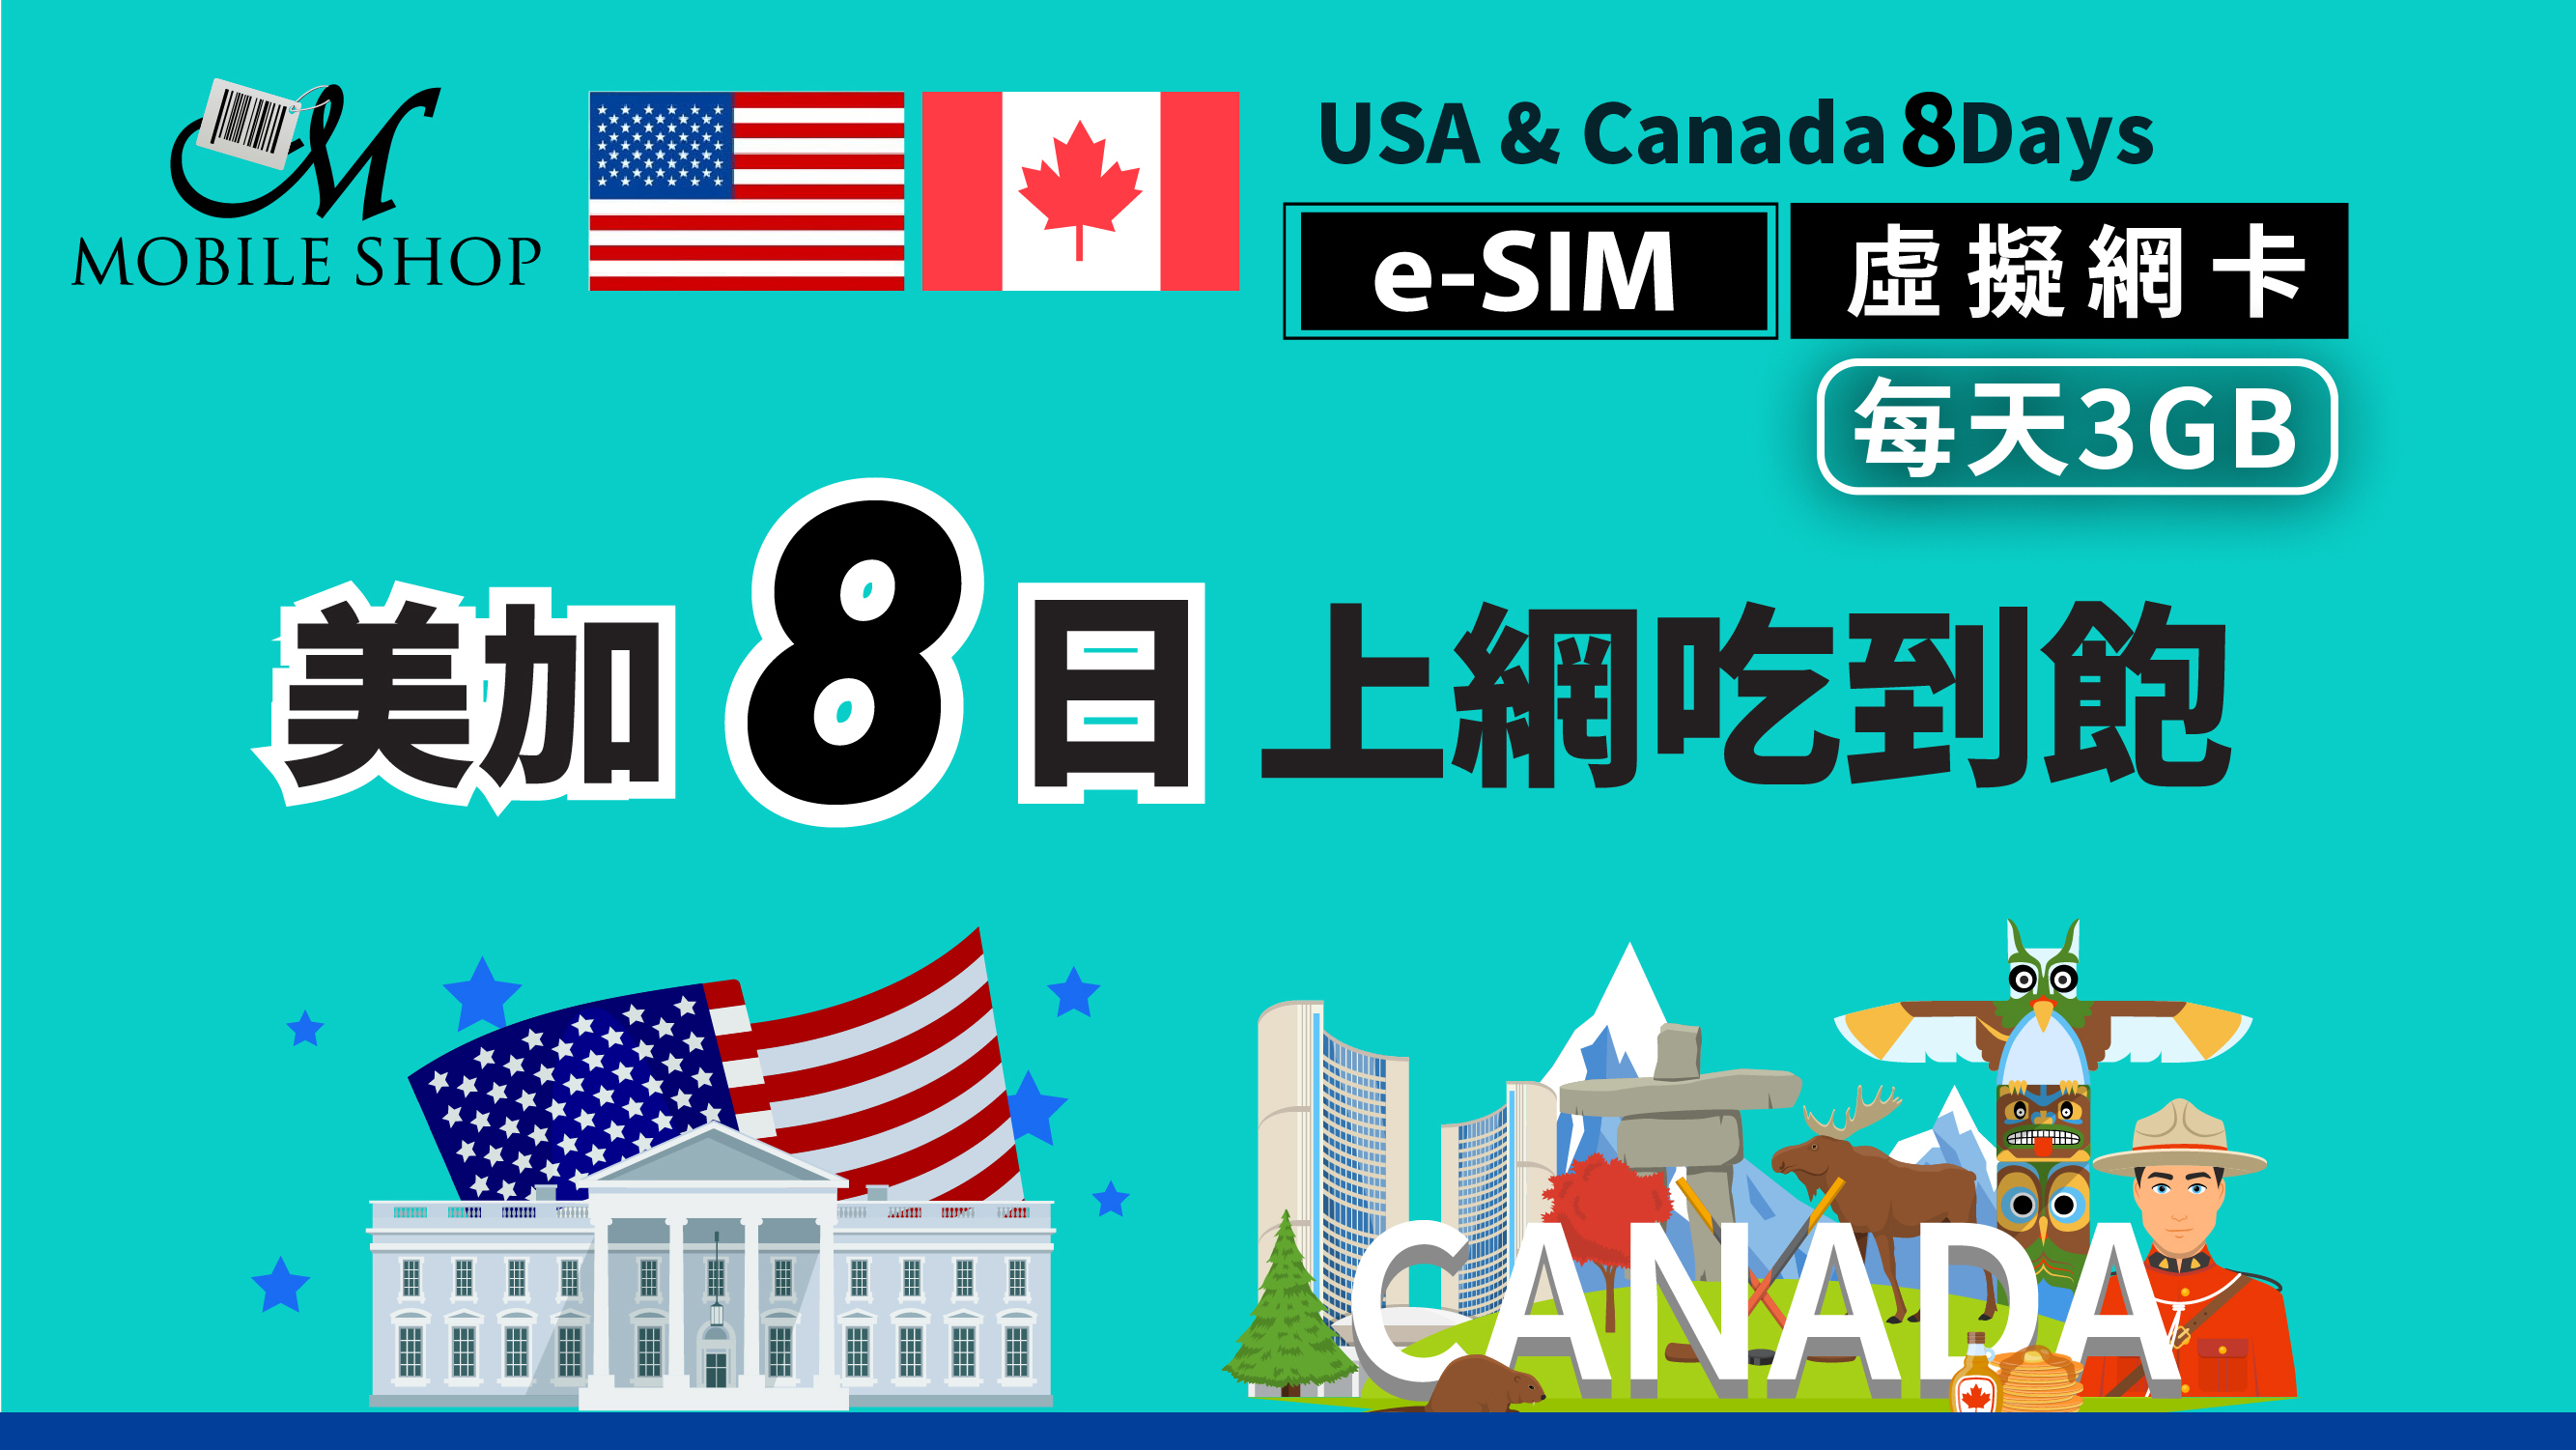 e-SIM_U.S./Canada 8 Days/3GB per day unlimited data